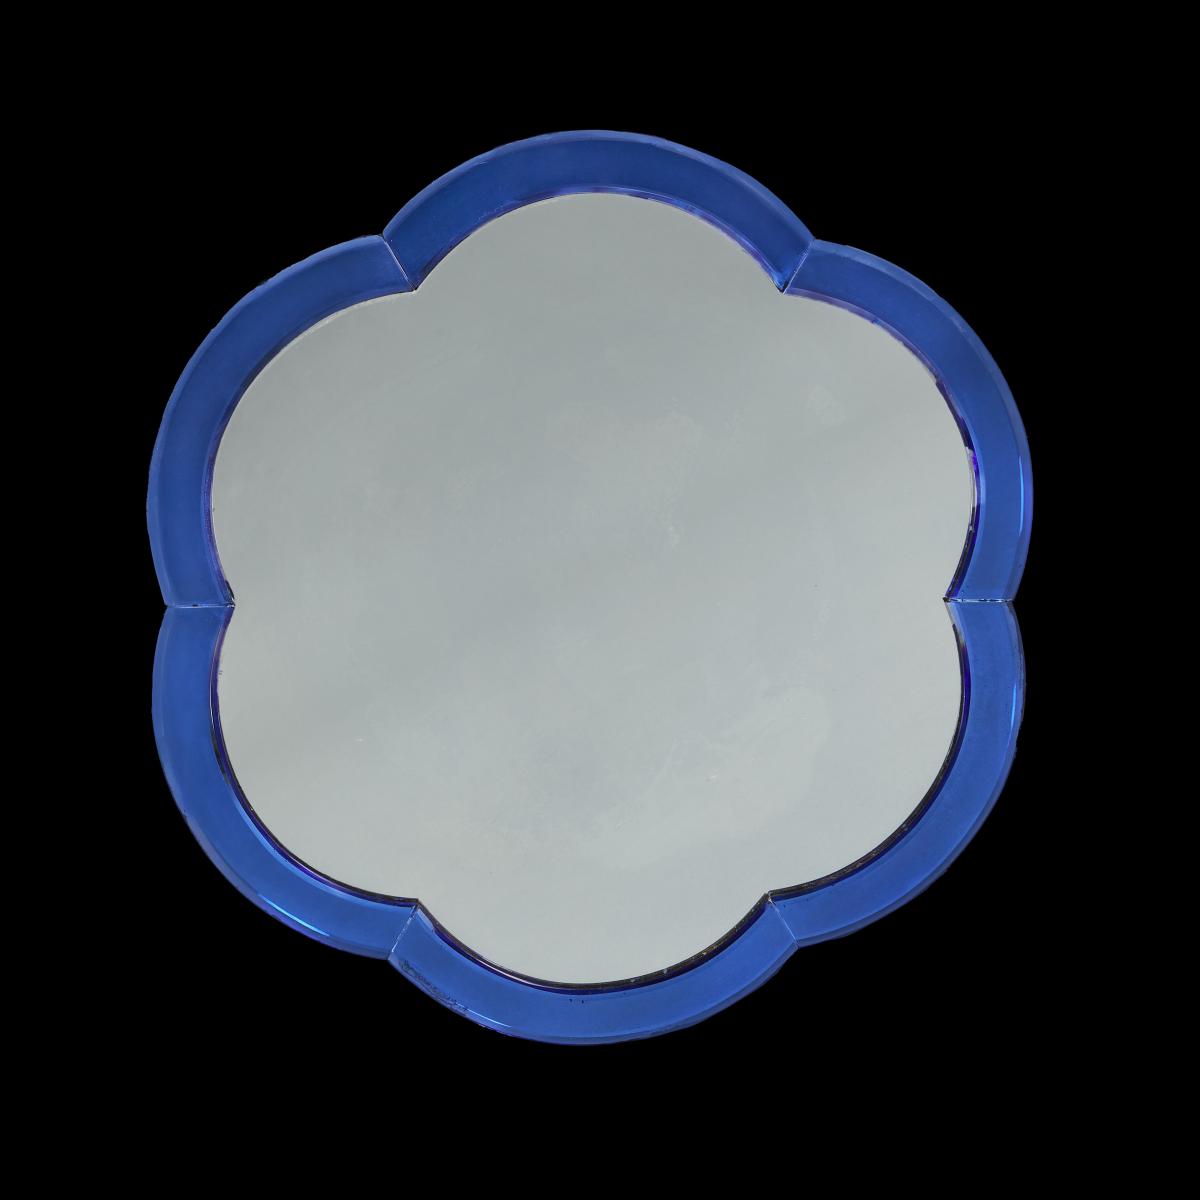 A Blue Art Deco Hexafoil Mirror